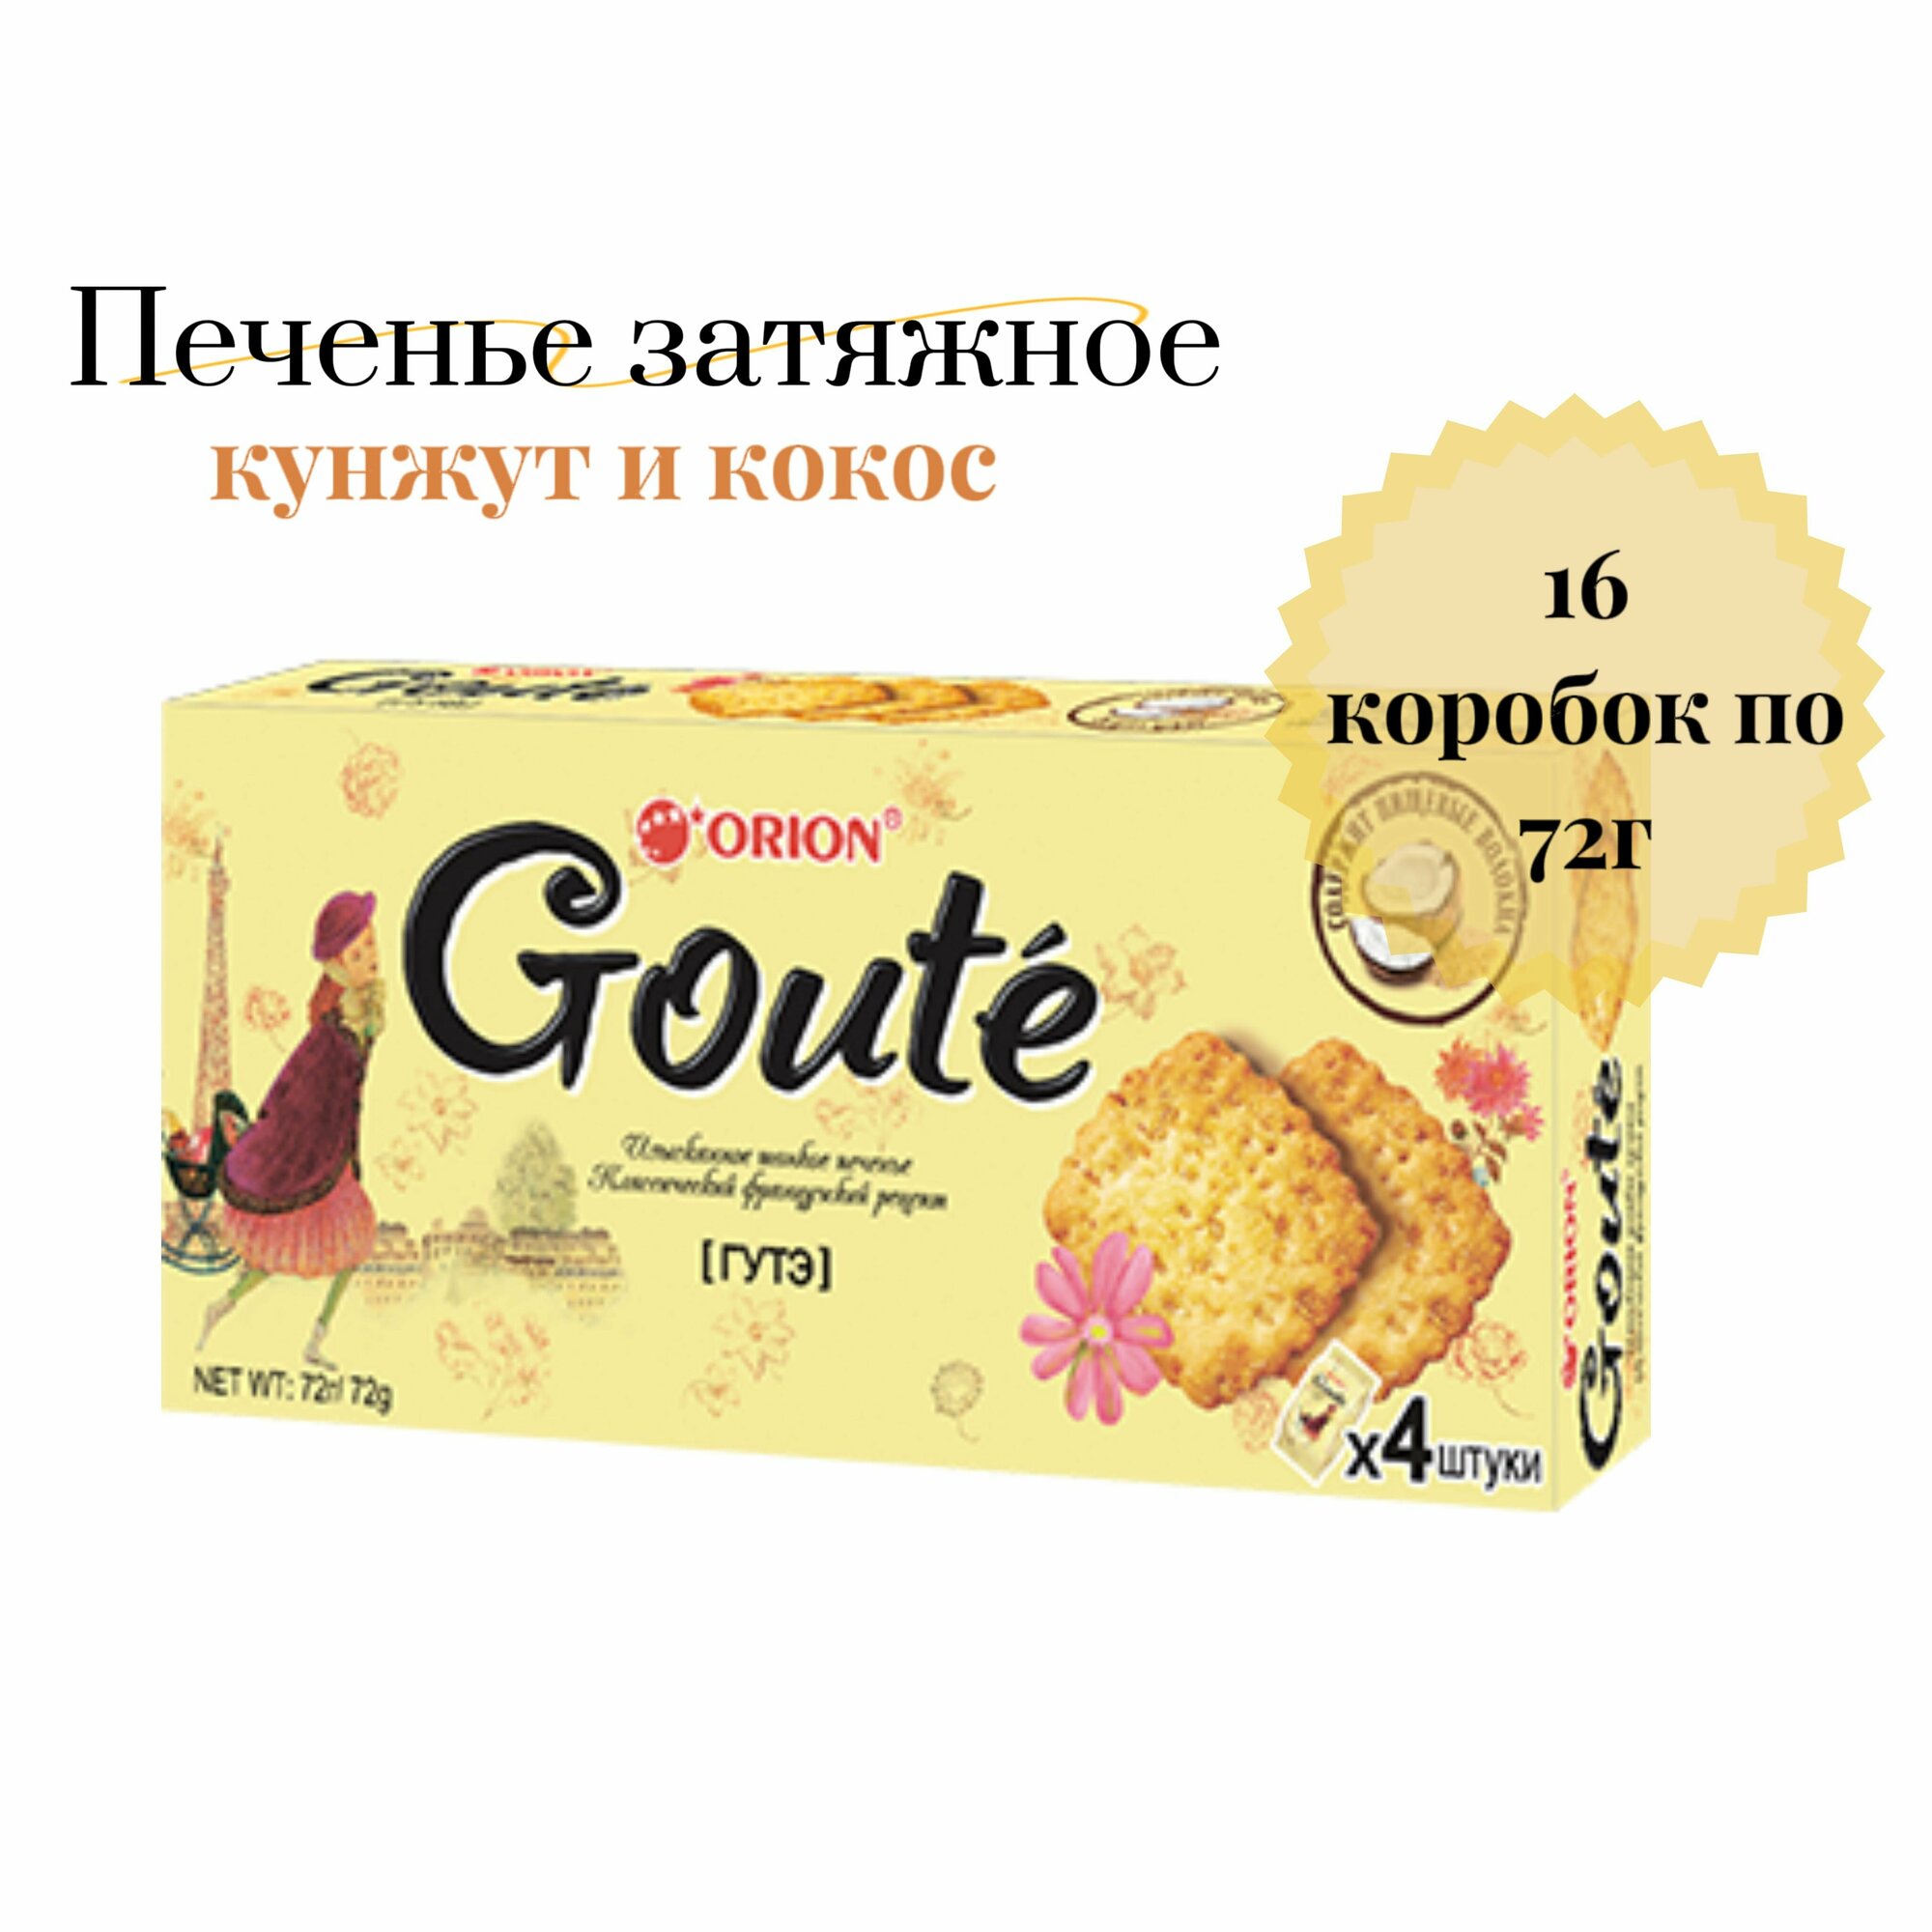 Печенье Orion Goute затяжное, 16 шт. по 72 гр.